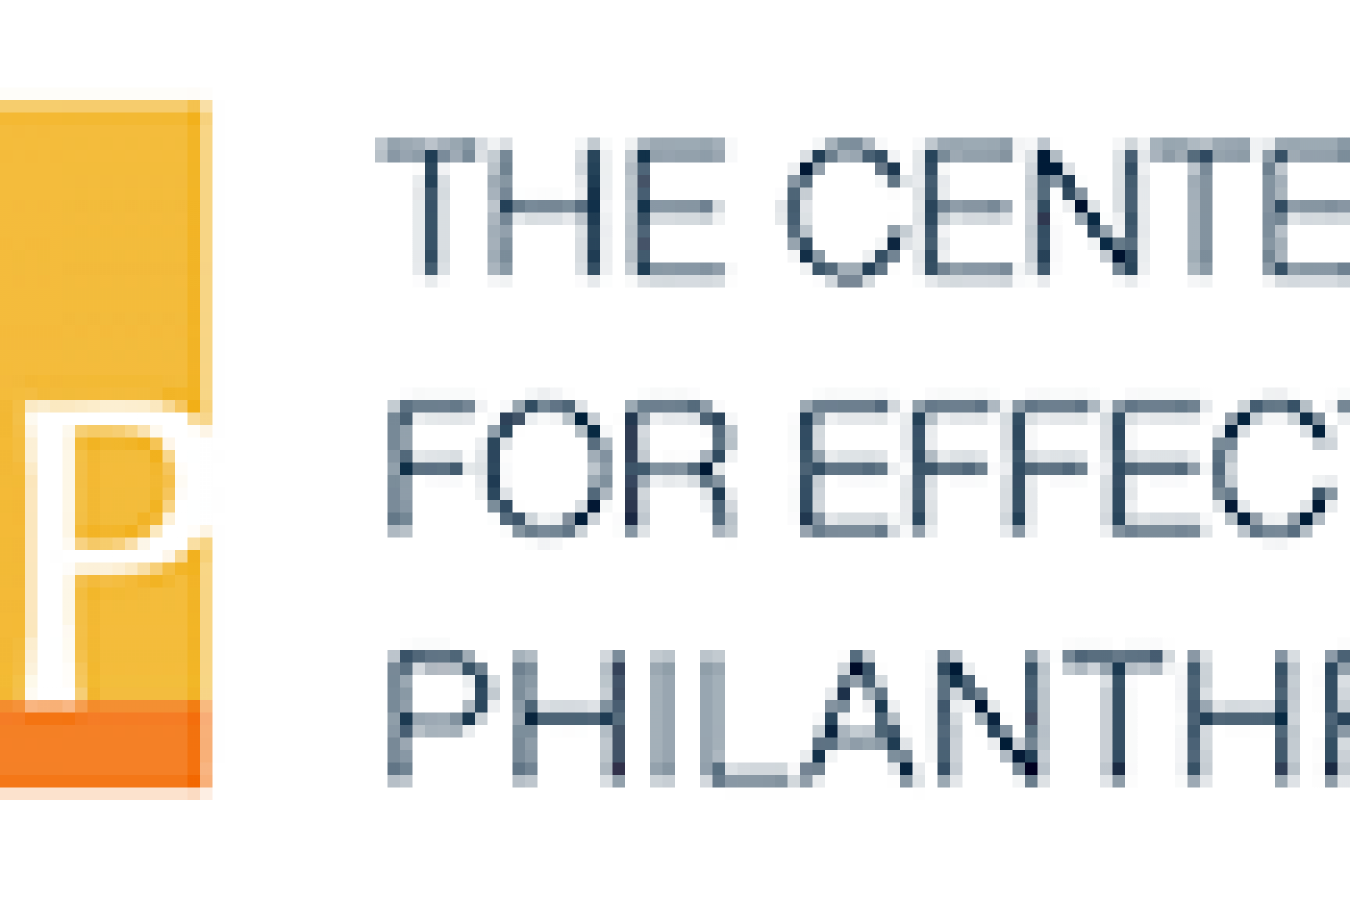 Center for Effective Philanthropy